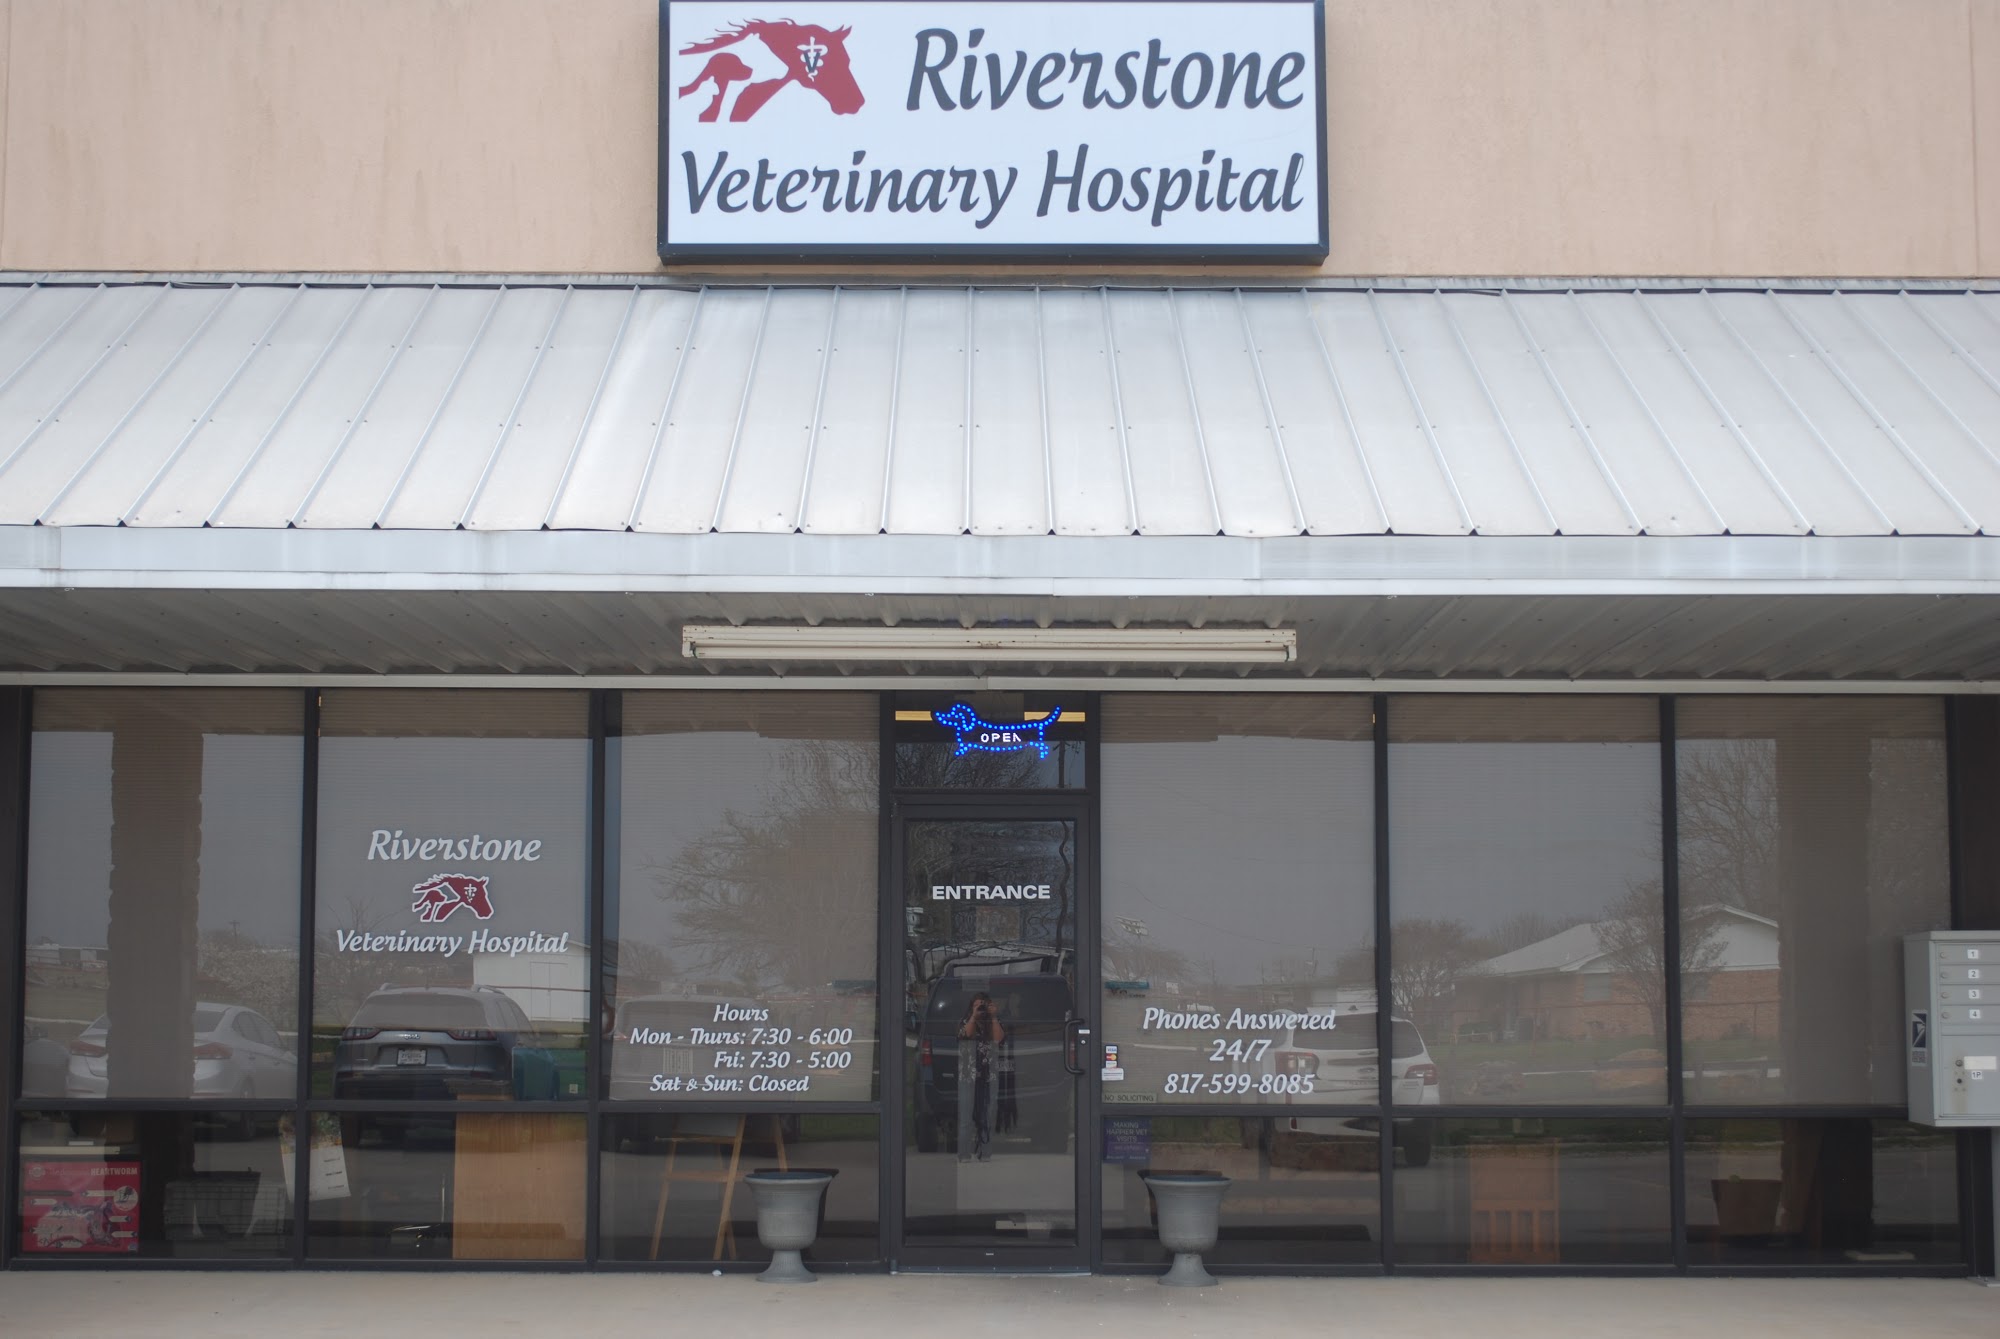 Riverstone Veterinary Hospital